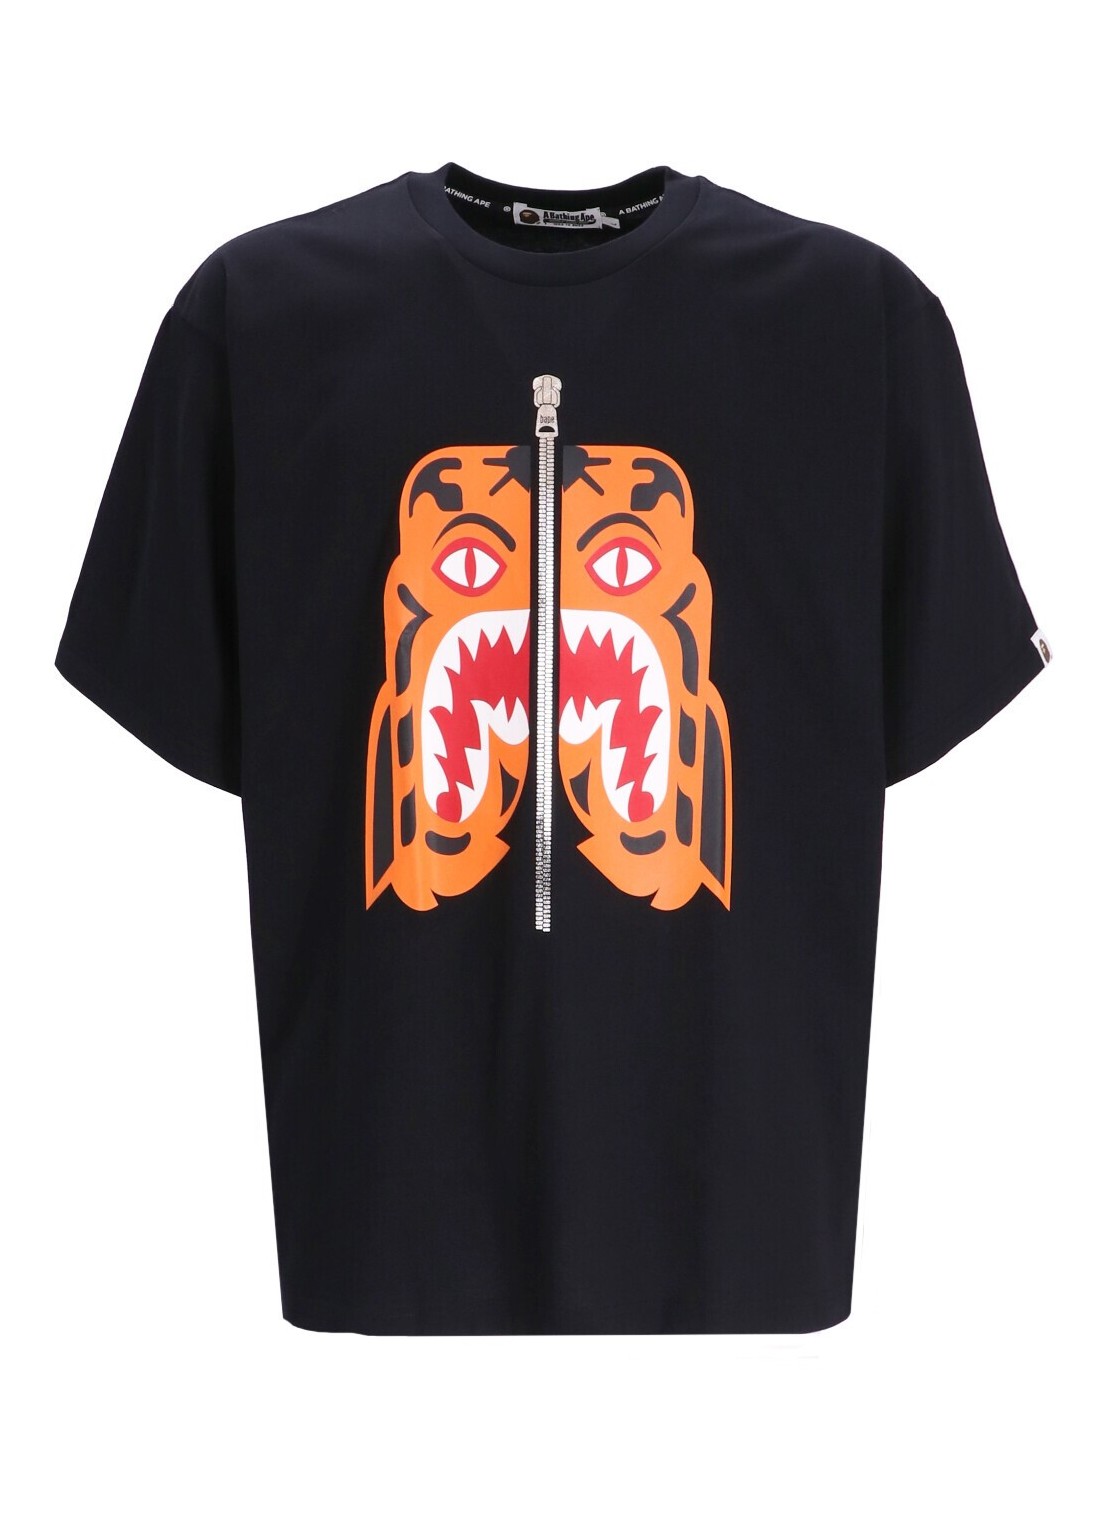 Camiseta bape t-shirt man tiger relaxed fit tee m 001csi801012m black talla S
 